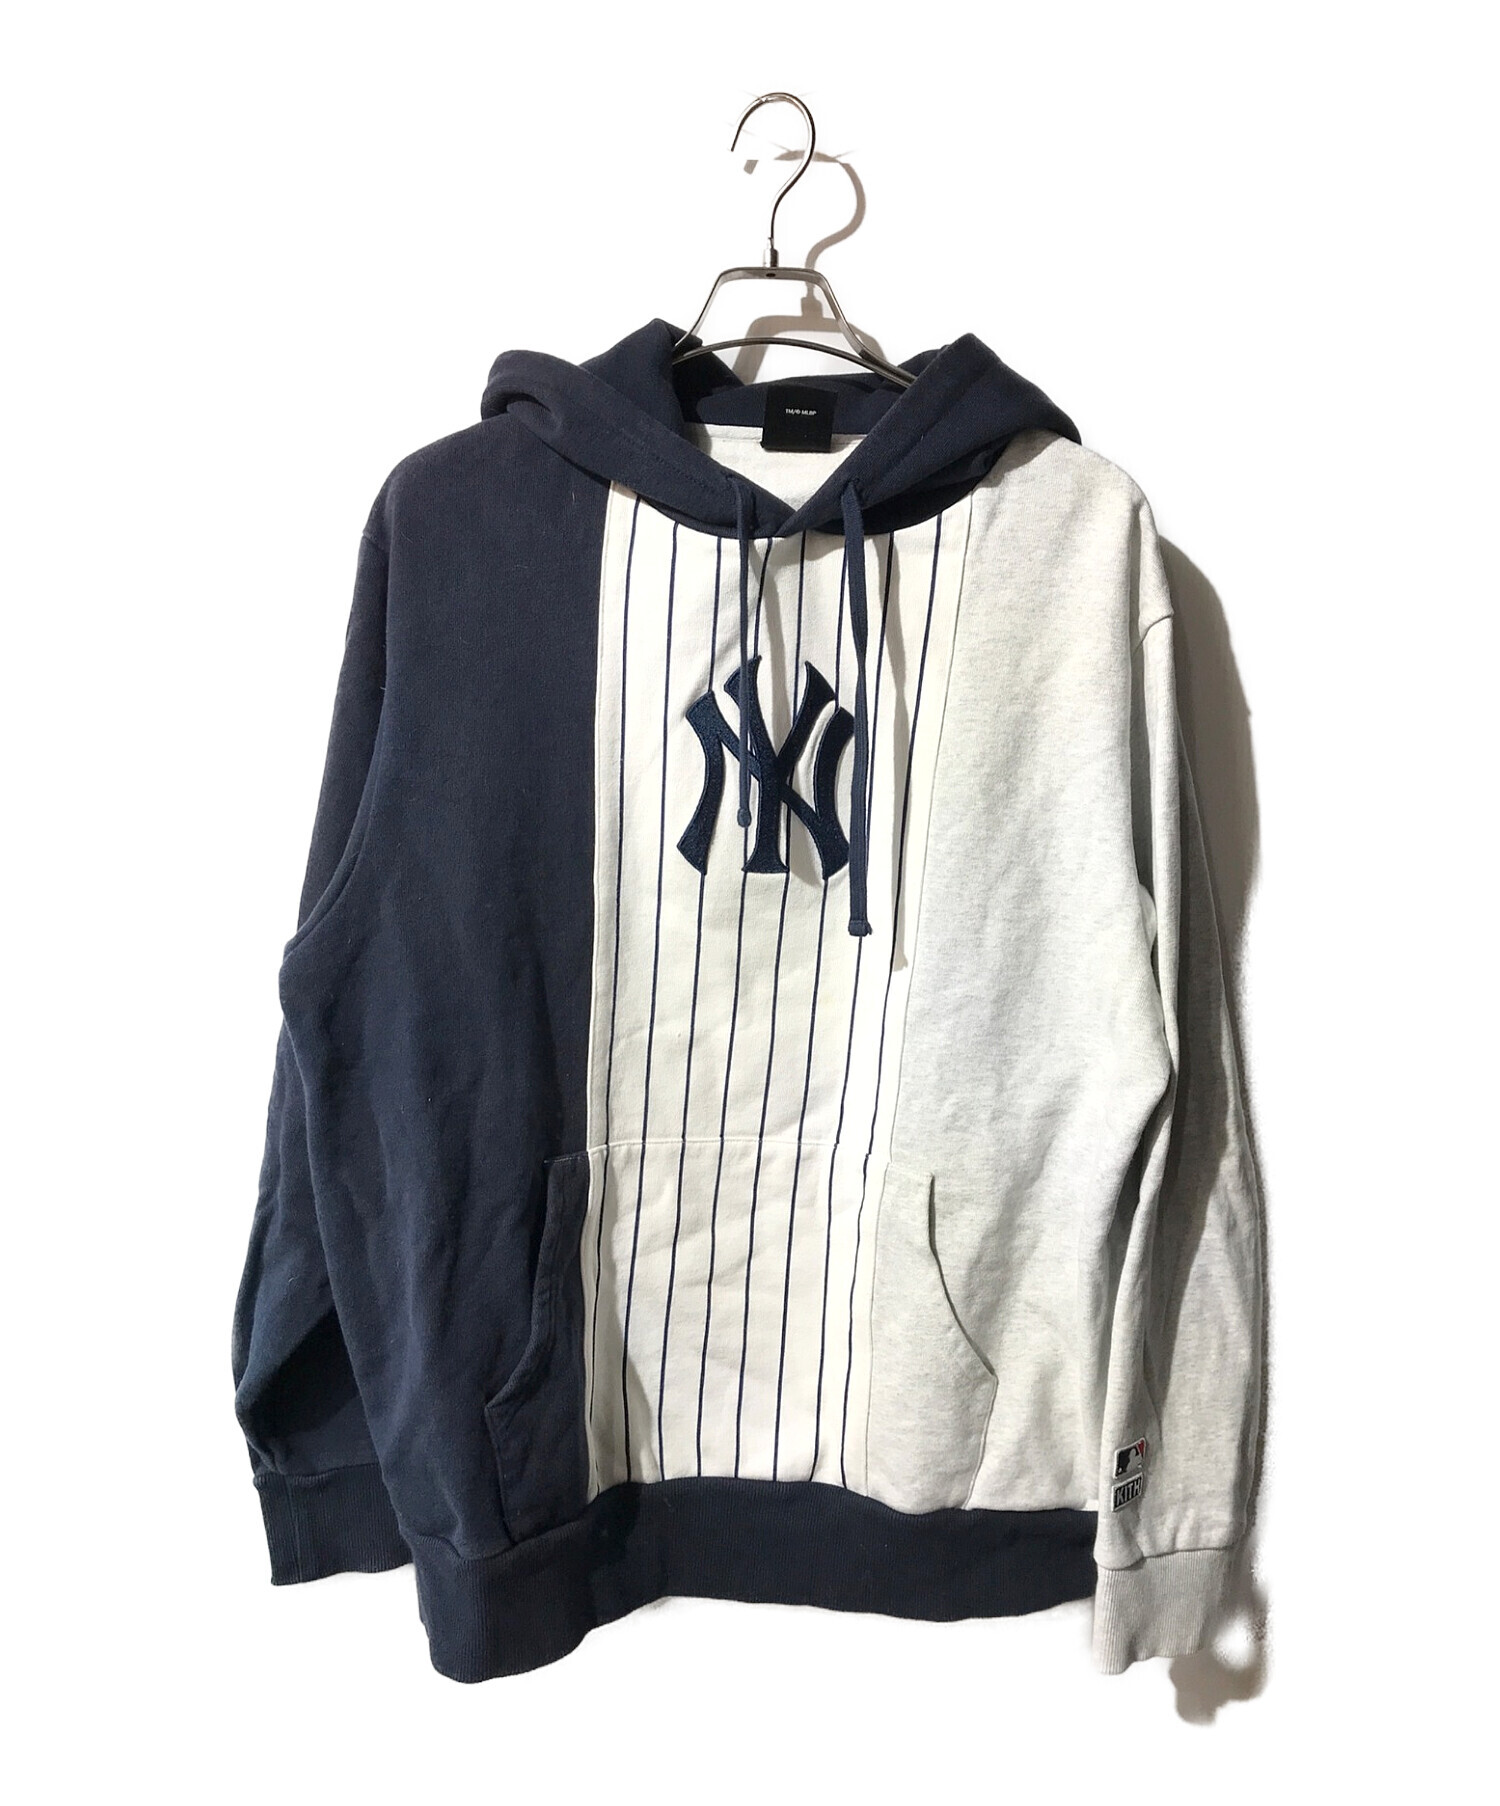 KITH Yankees hoodie パーカー着用してません